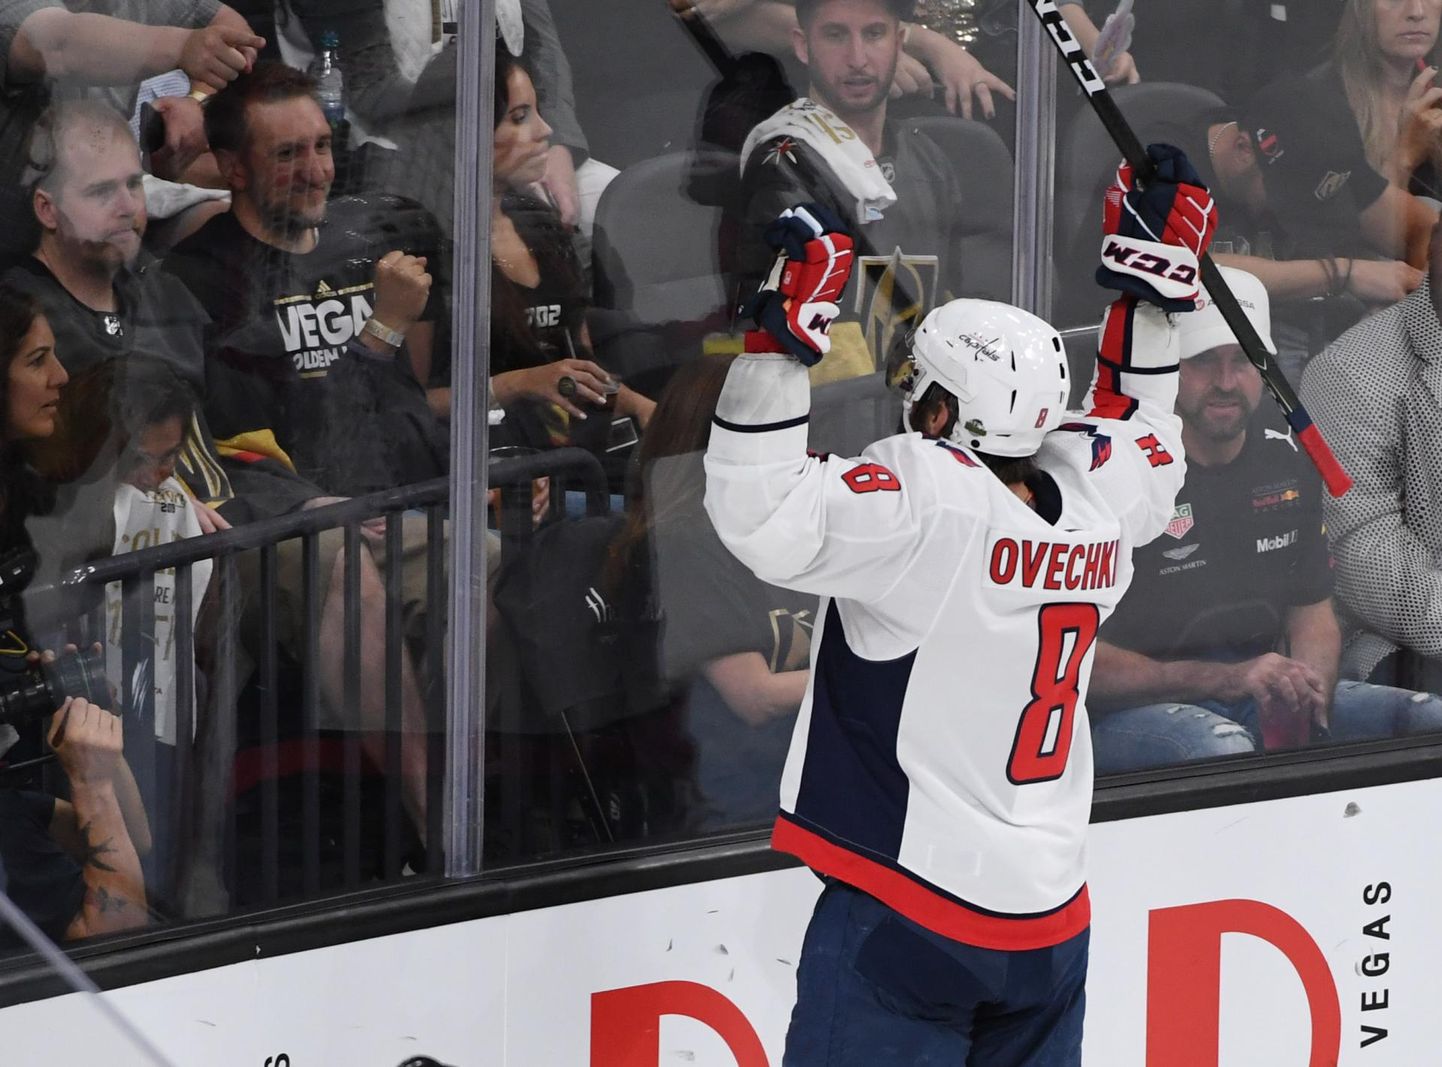 Aleksandr Ovetškin viskas pika NHLi-karjääri esimese finaalivärava. FOTO: Stephen R. Sylvanie/Usa Today Sports/Scanpix